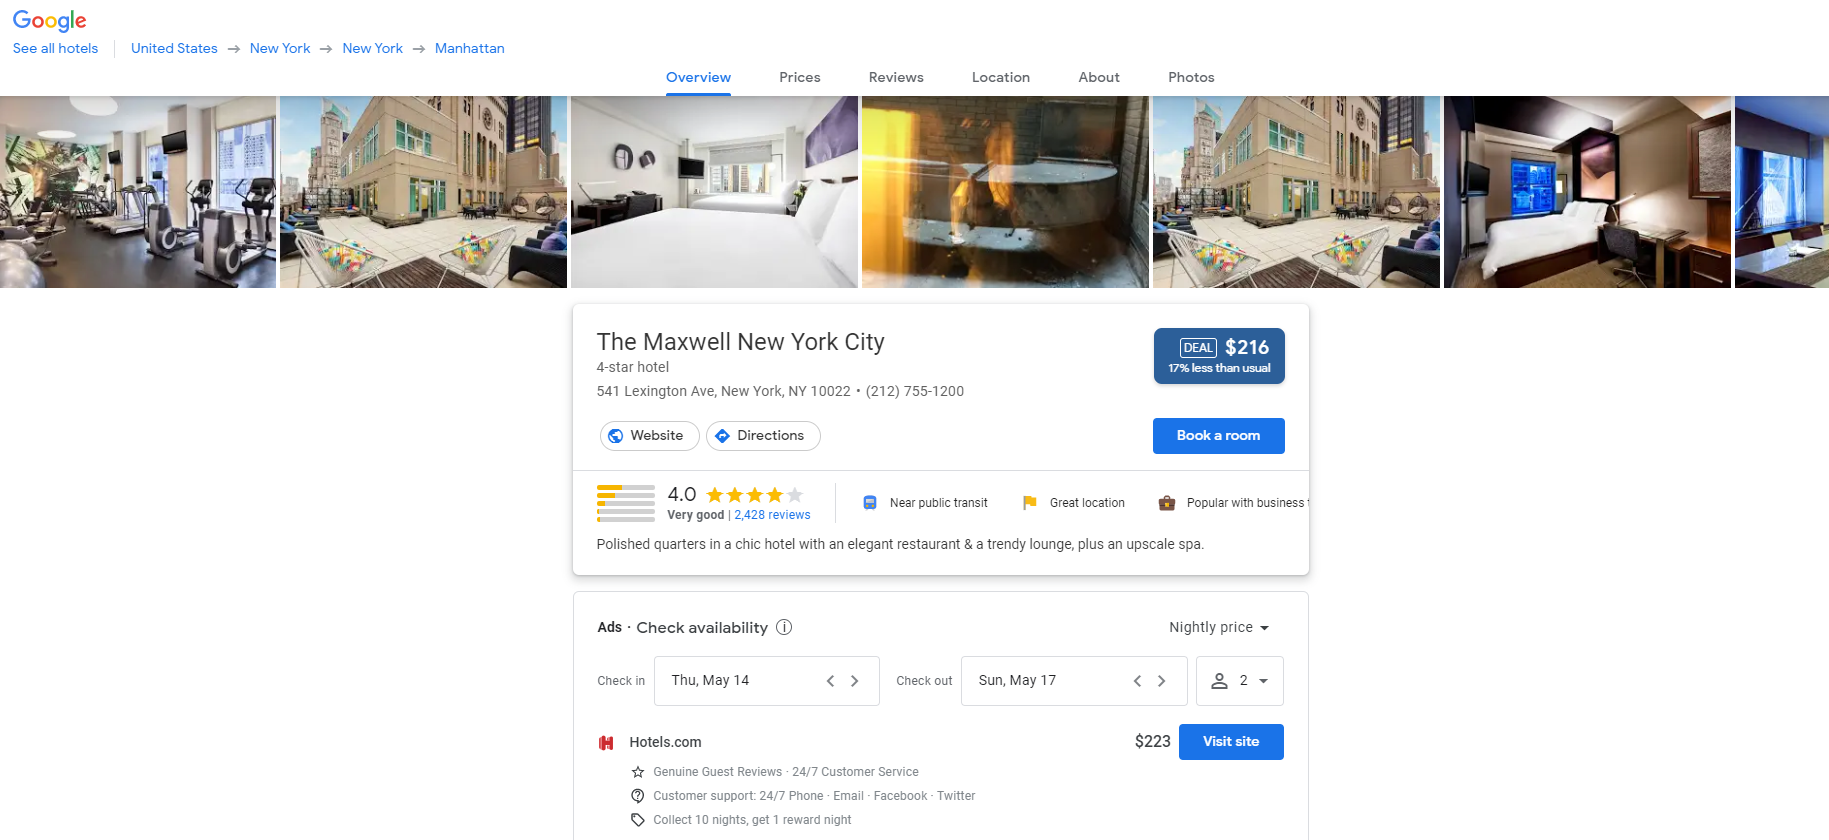 google travel flights and hotels